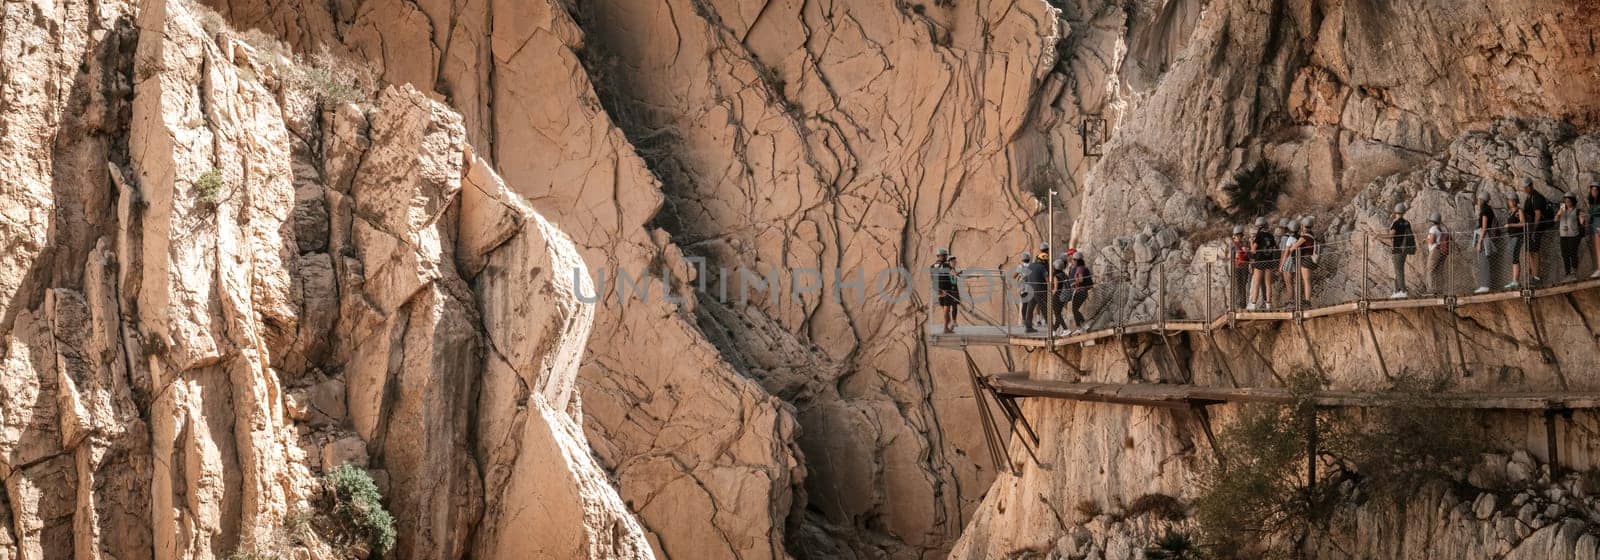 Tourists trek the awe-inspiring King's Pathway Canyon in Malaga, a vertiginous walkway hanging amidst vertical rock walls.